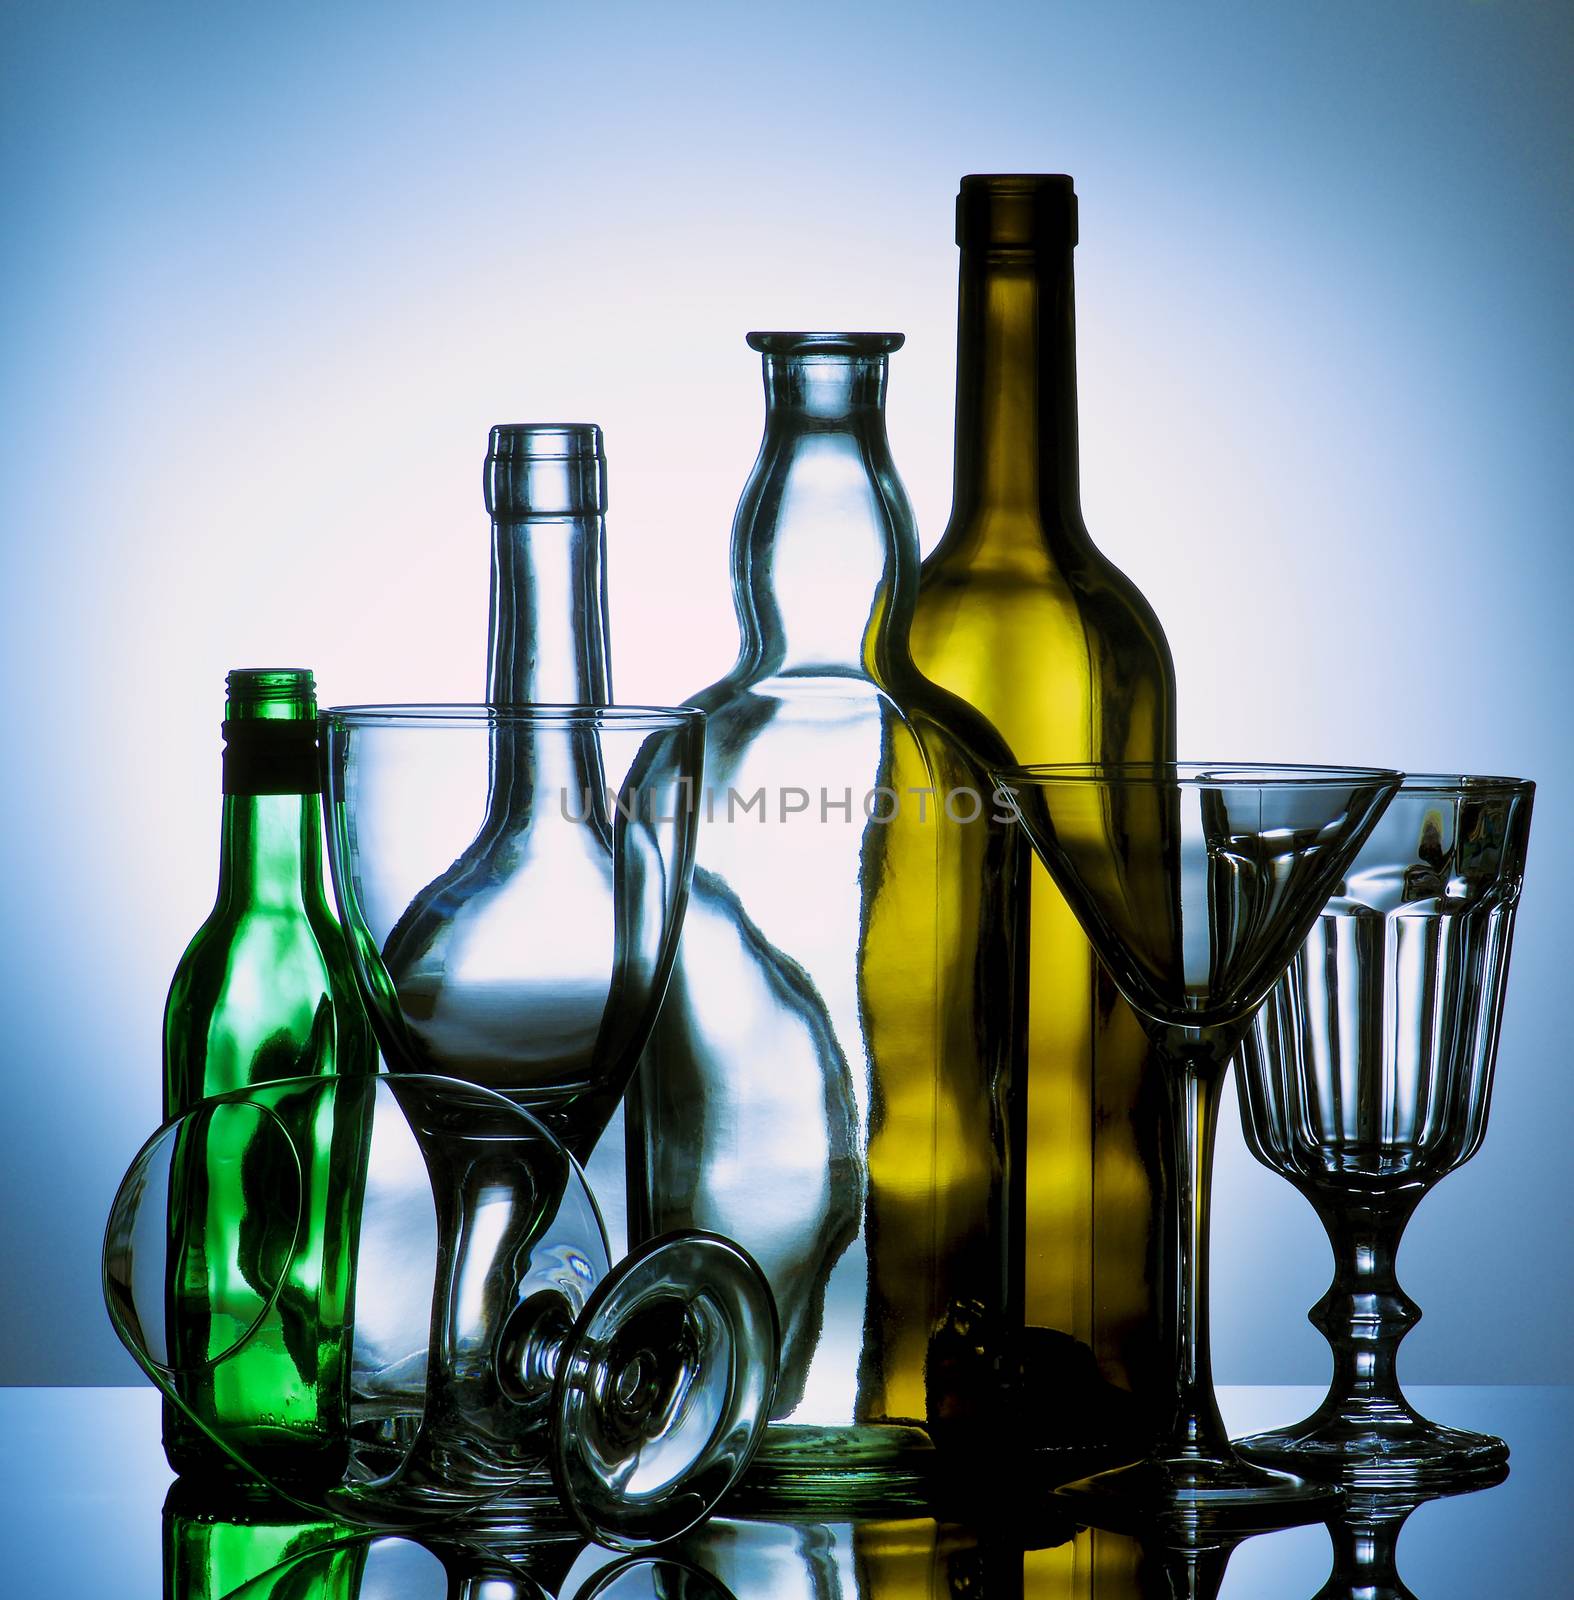 Empty Wine Glasses and Bottles by zhekos